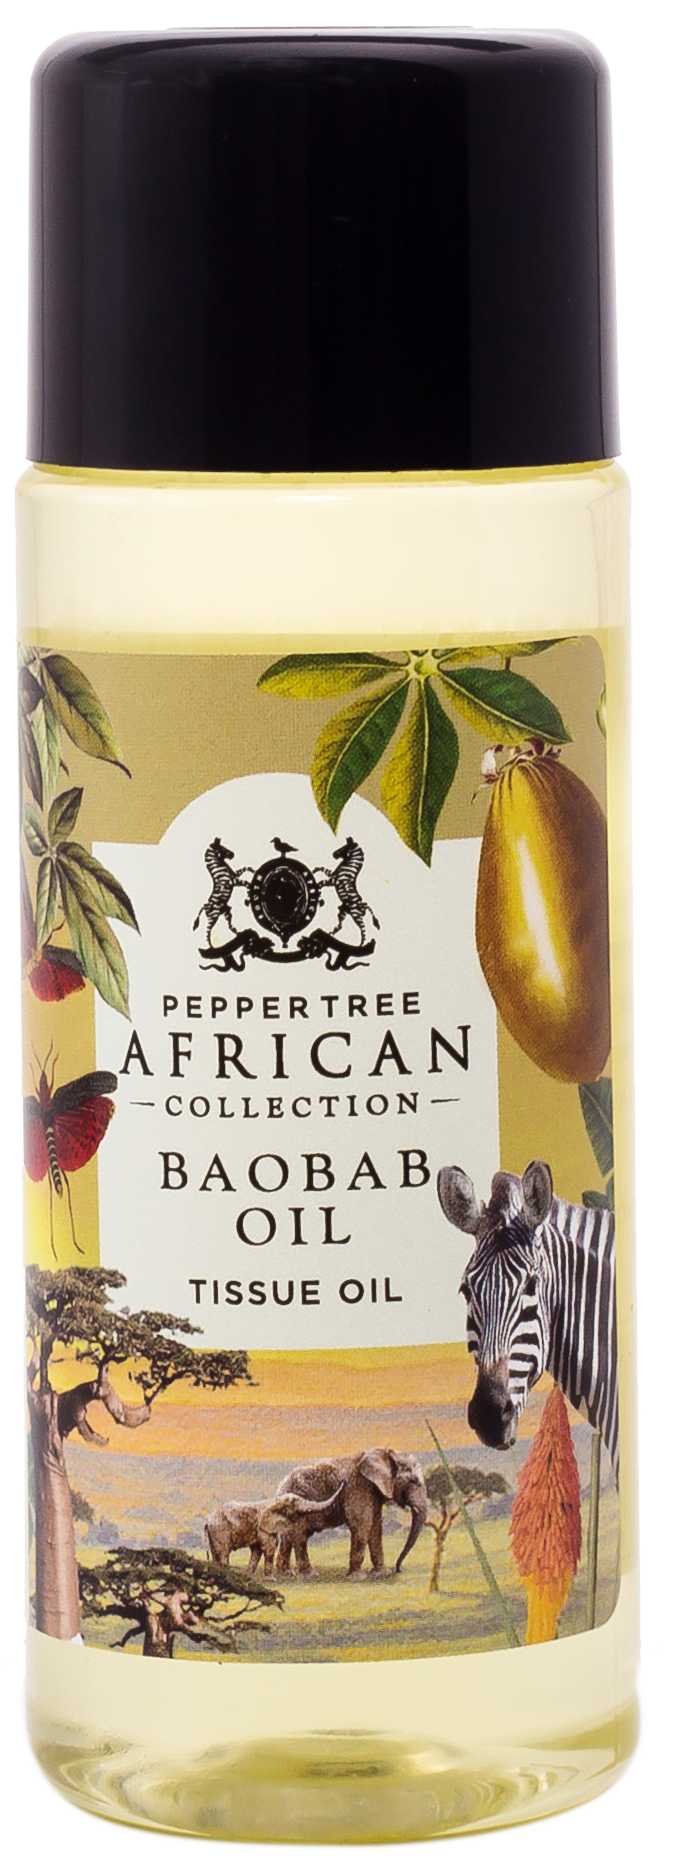 Baobab Tissue Oil 100 ml